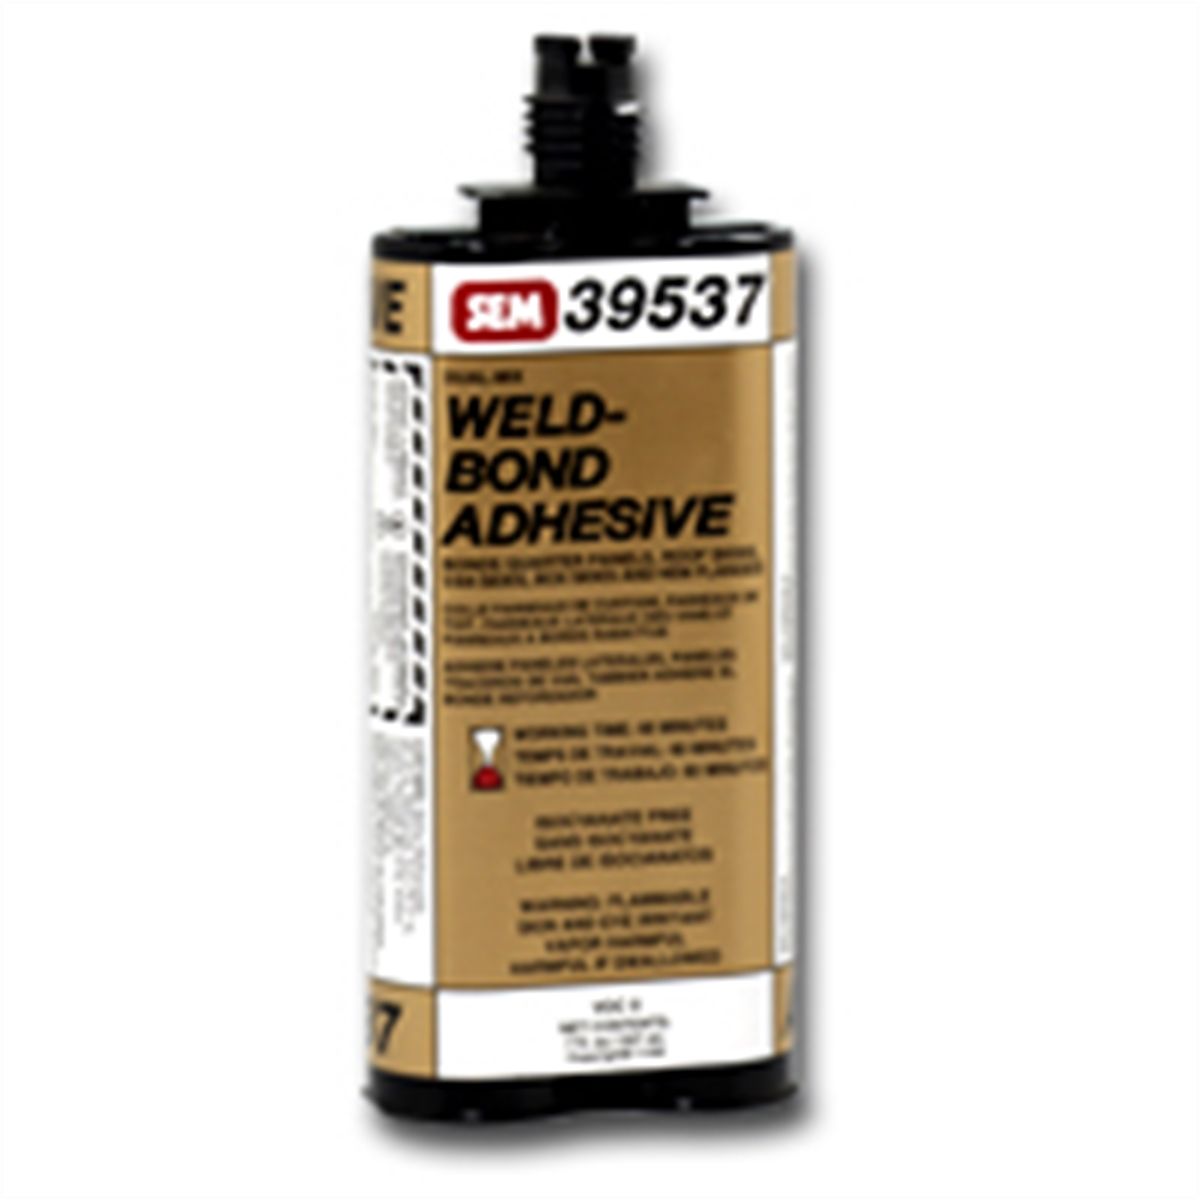 SEM, Weld-bond adhesive 39537